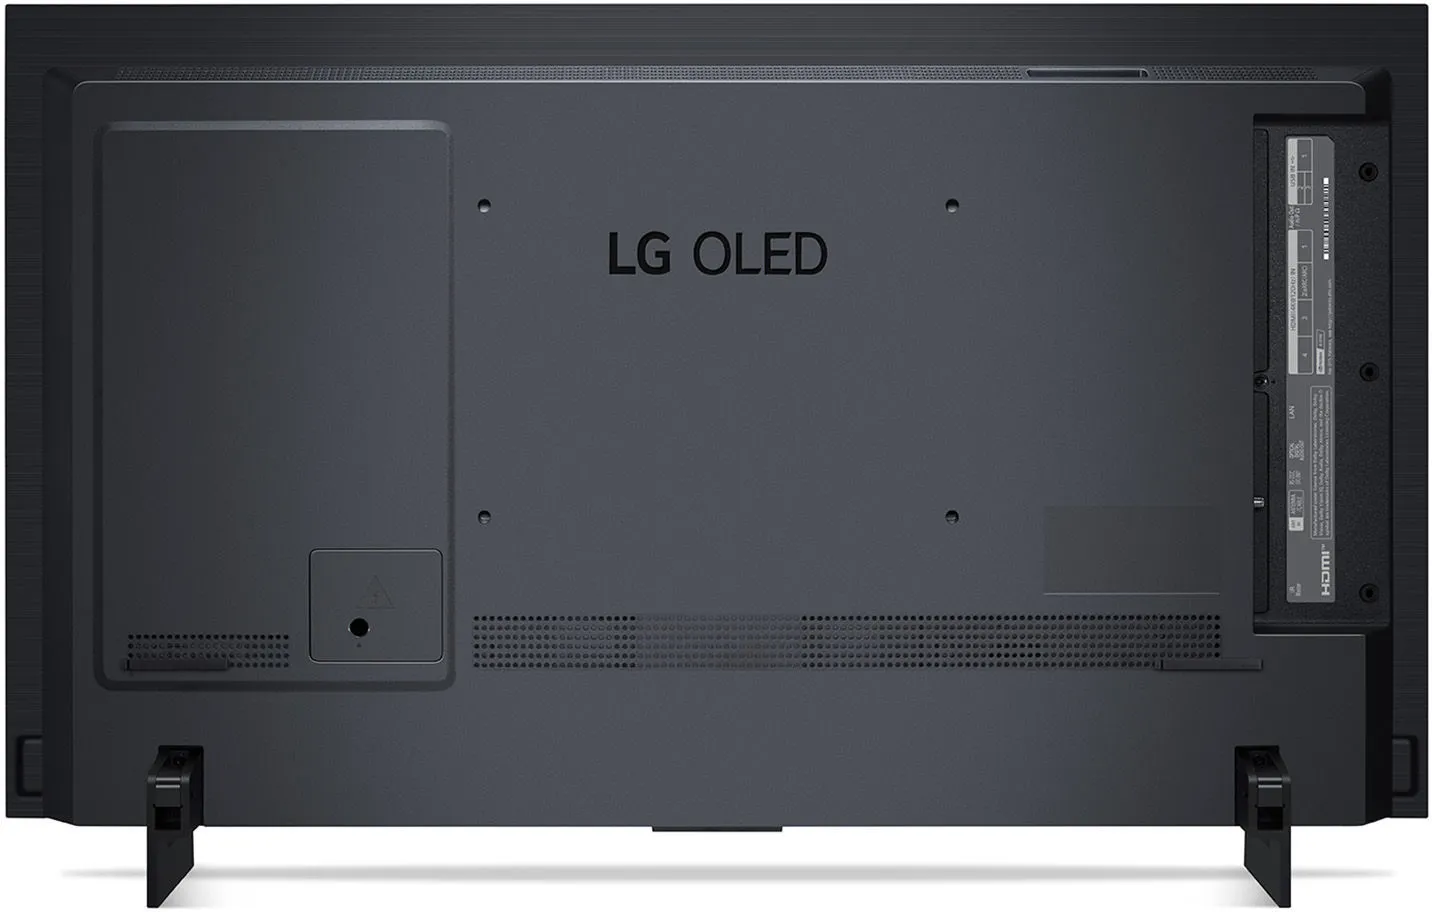 LG OLED42C3 - TV OLED 4K UHD HDR - 106 cm - TV LG sur